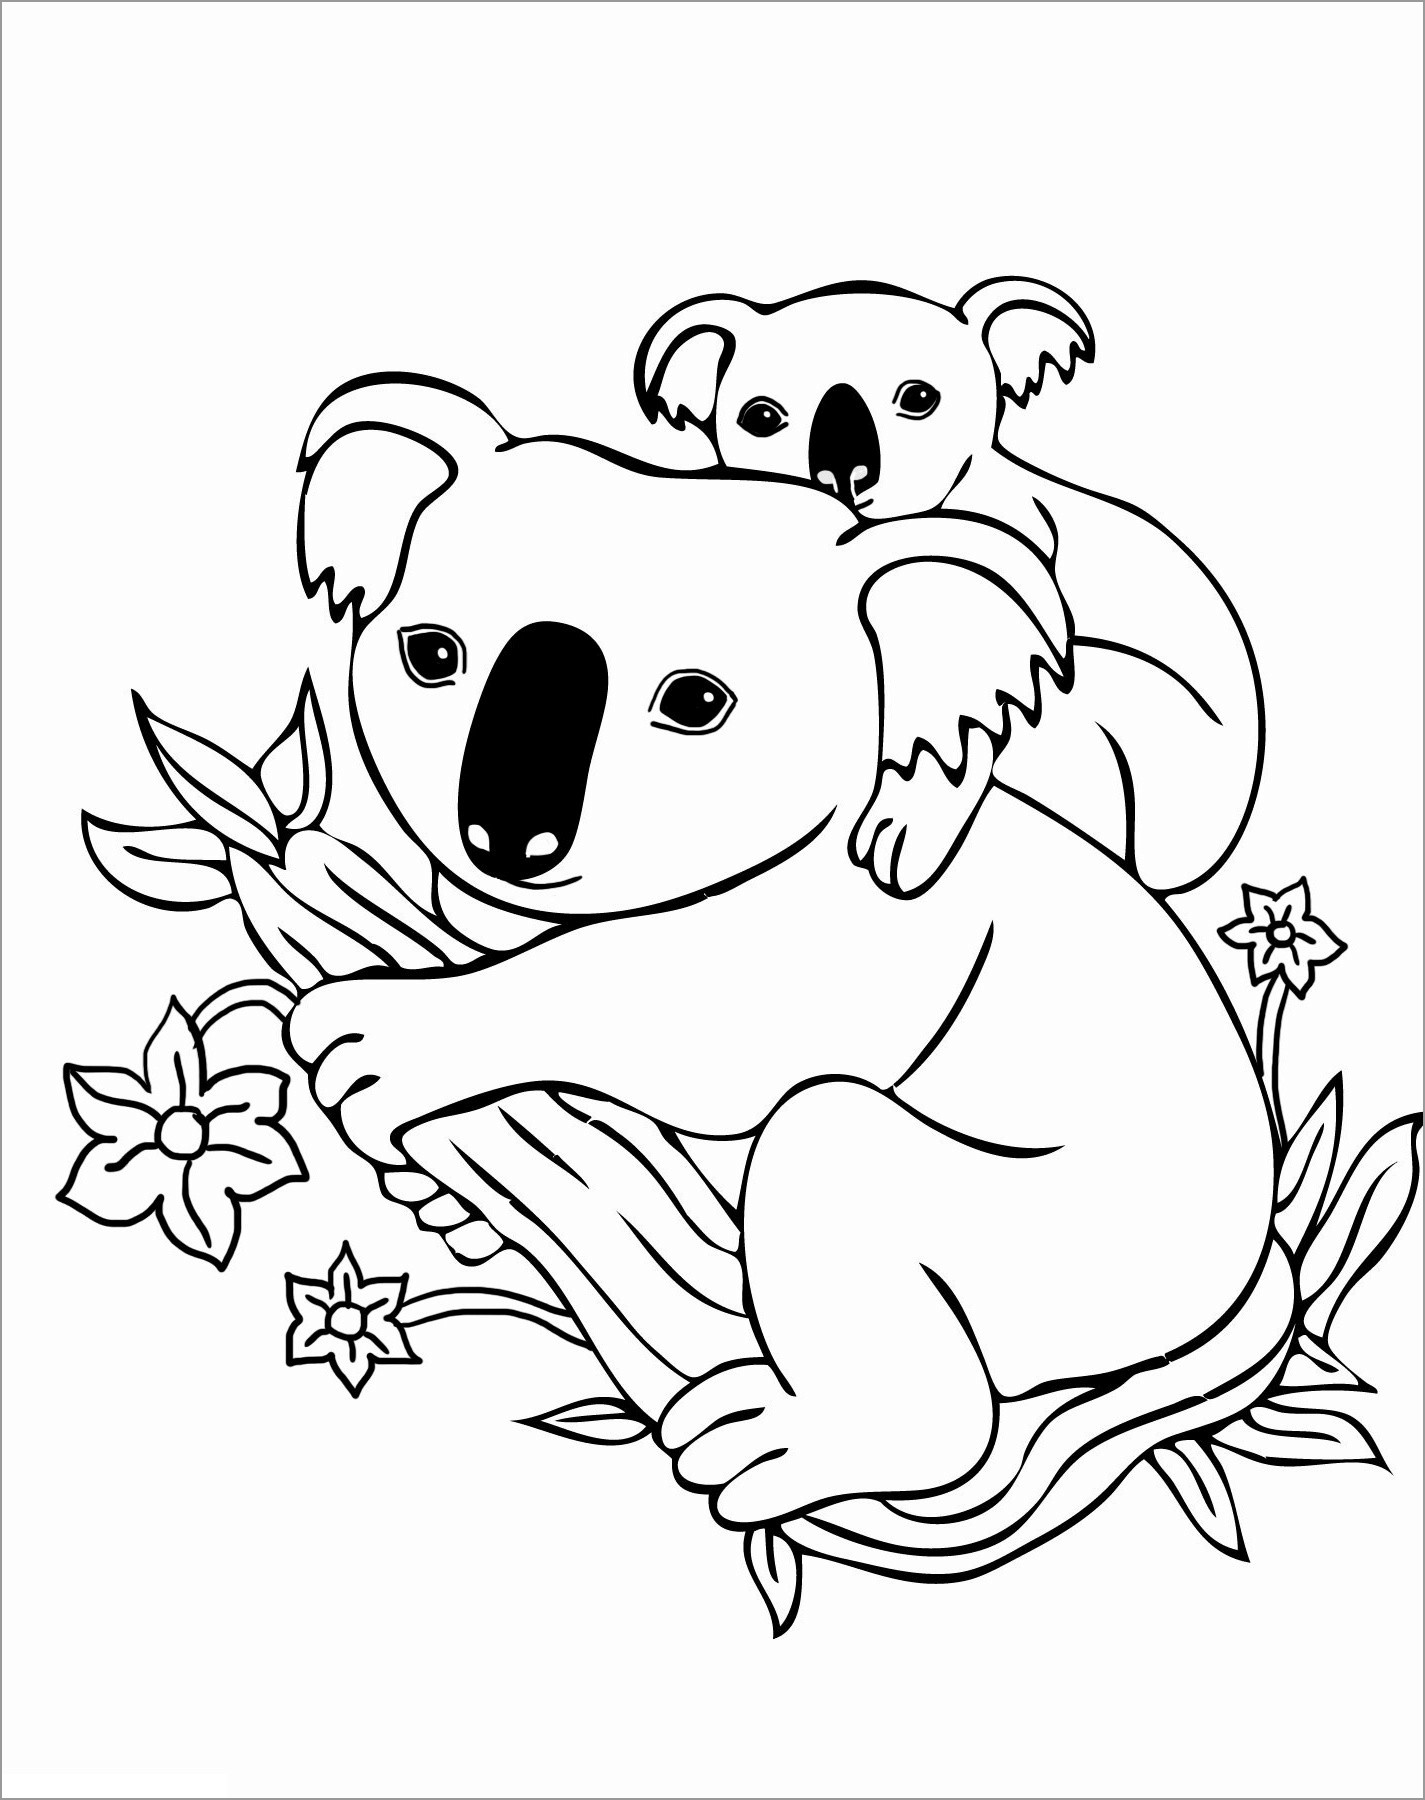 Printable Koala Coloring Page   ColoringBay